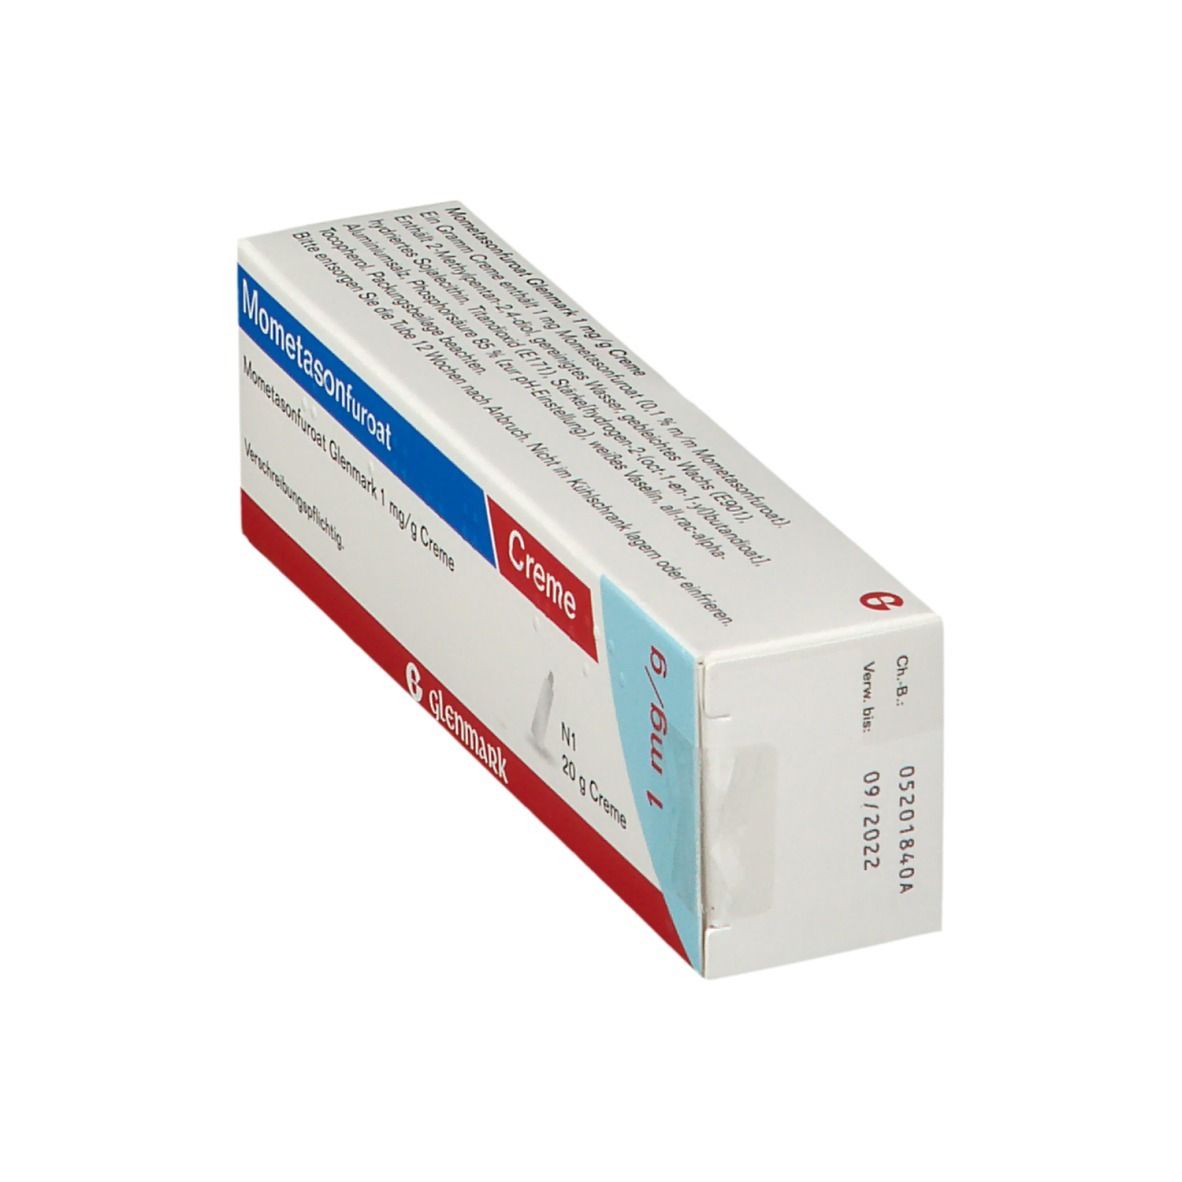 Mometasonfuroat Glenmark 1 mg/g